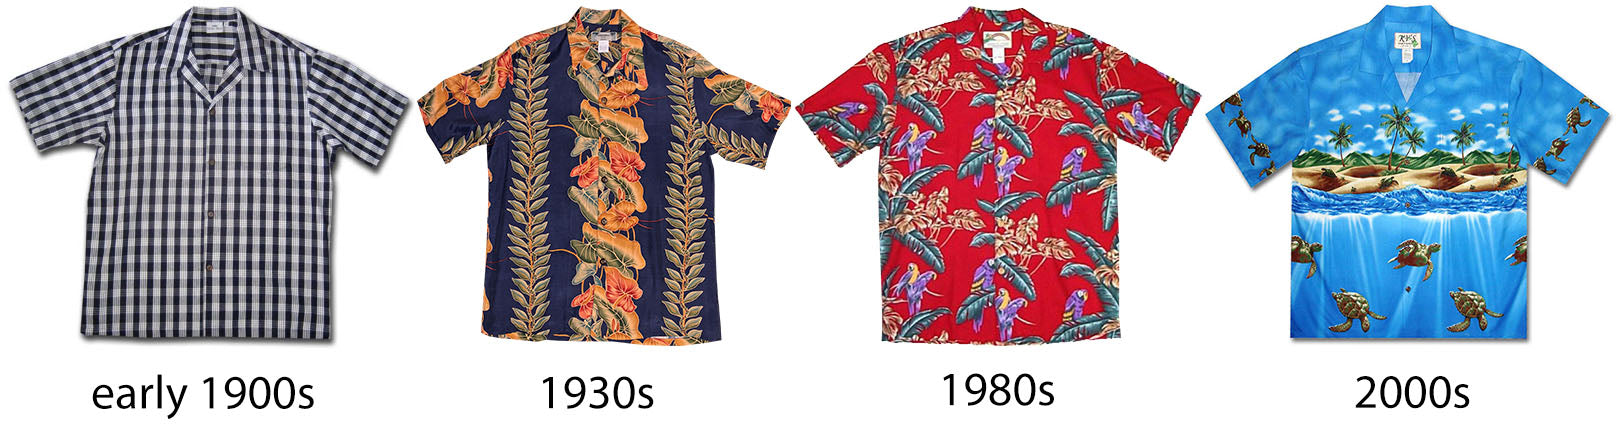 Hawaiian shirt evolution over the decades